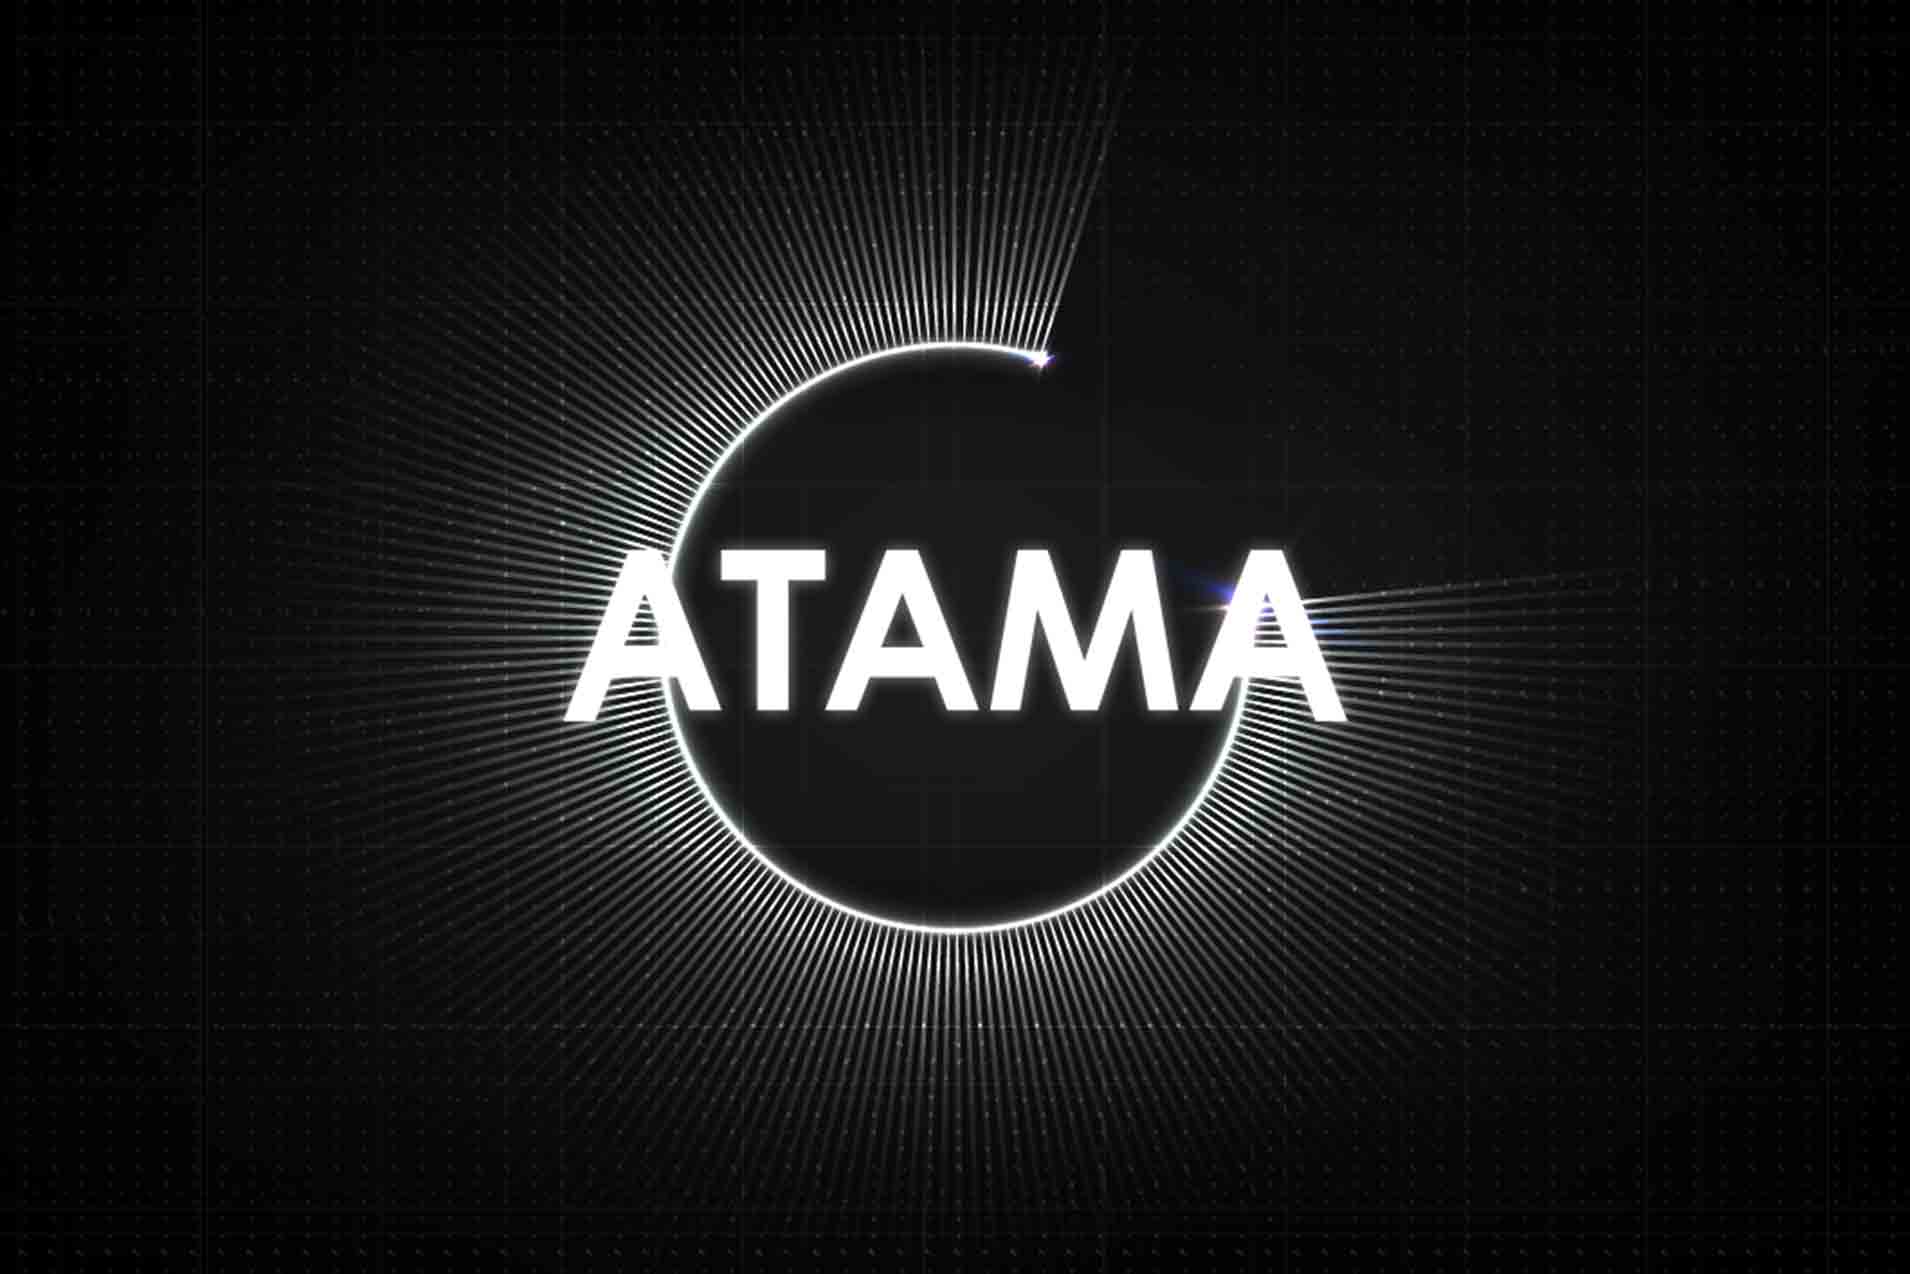 ATAMA Launched